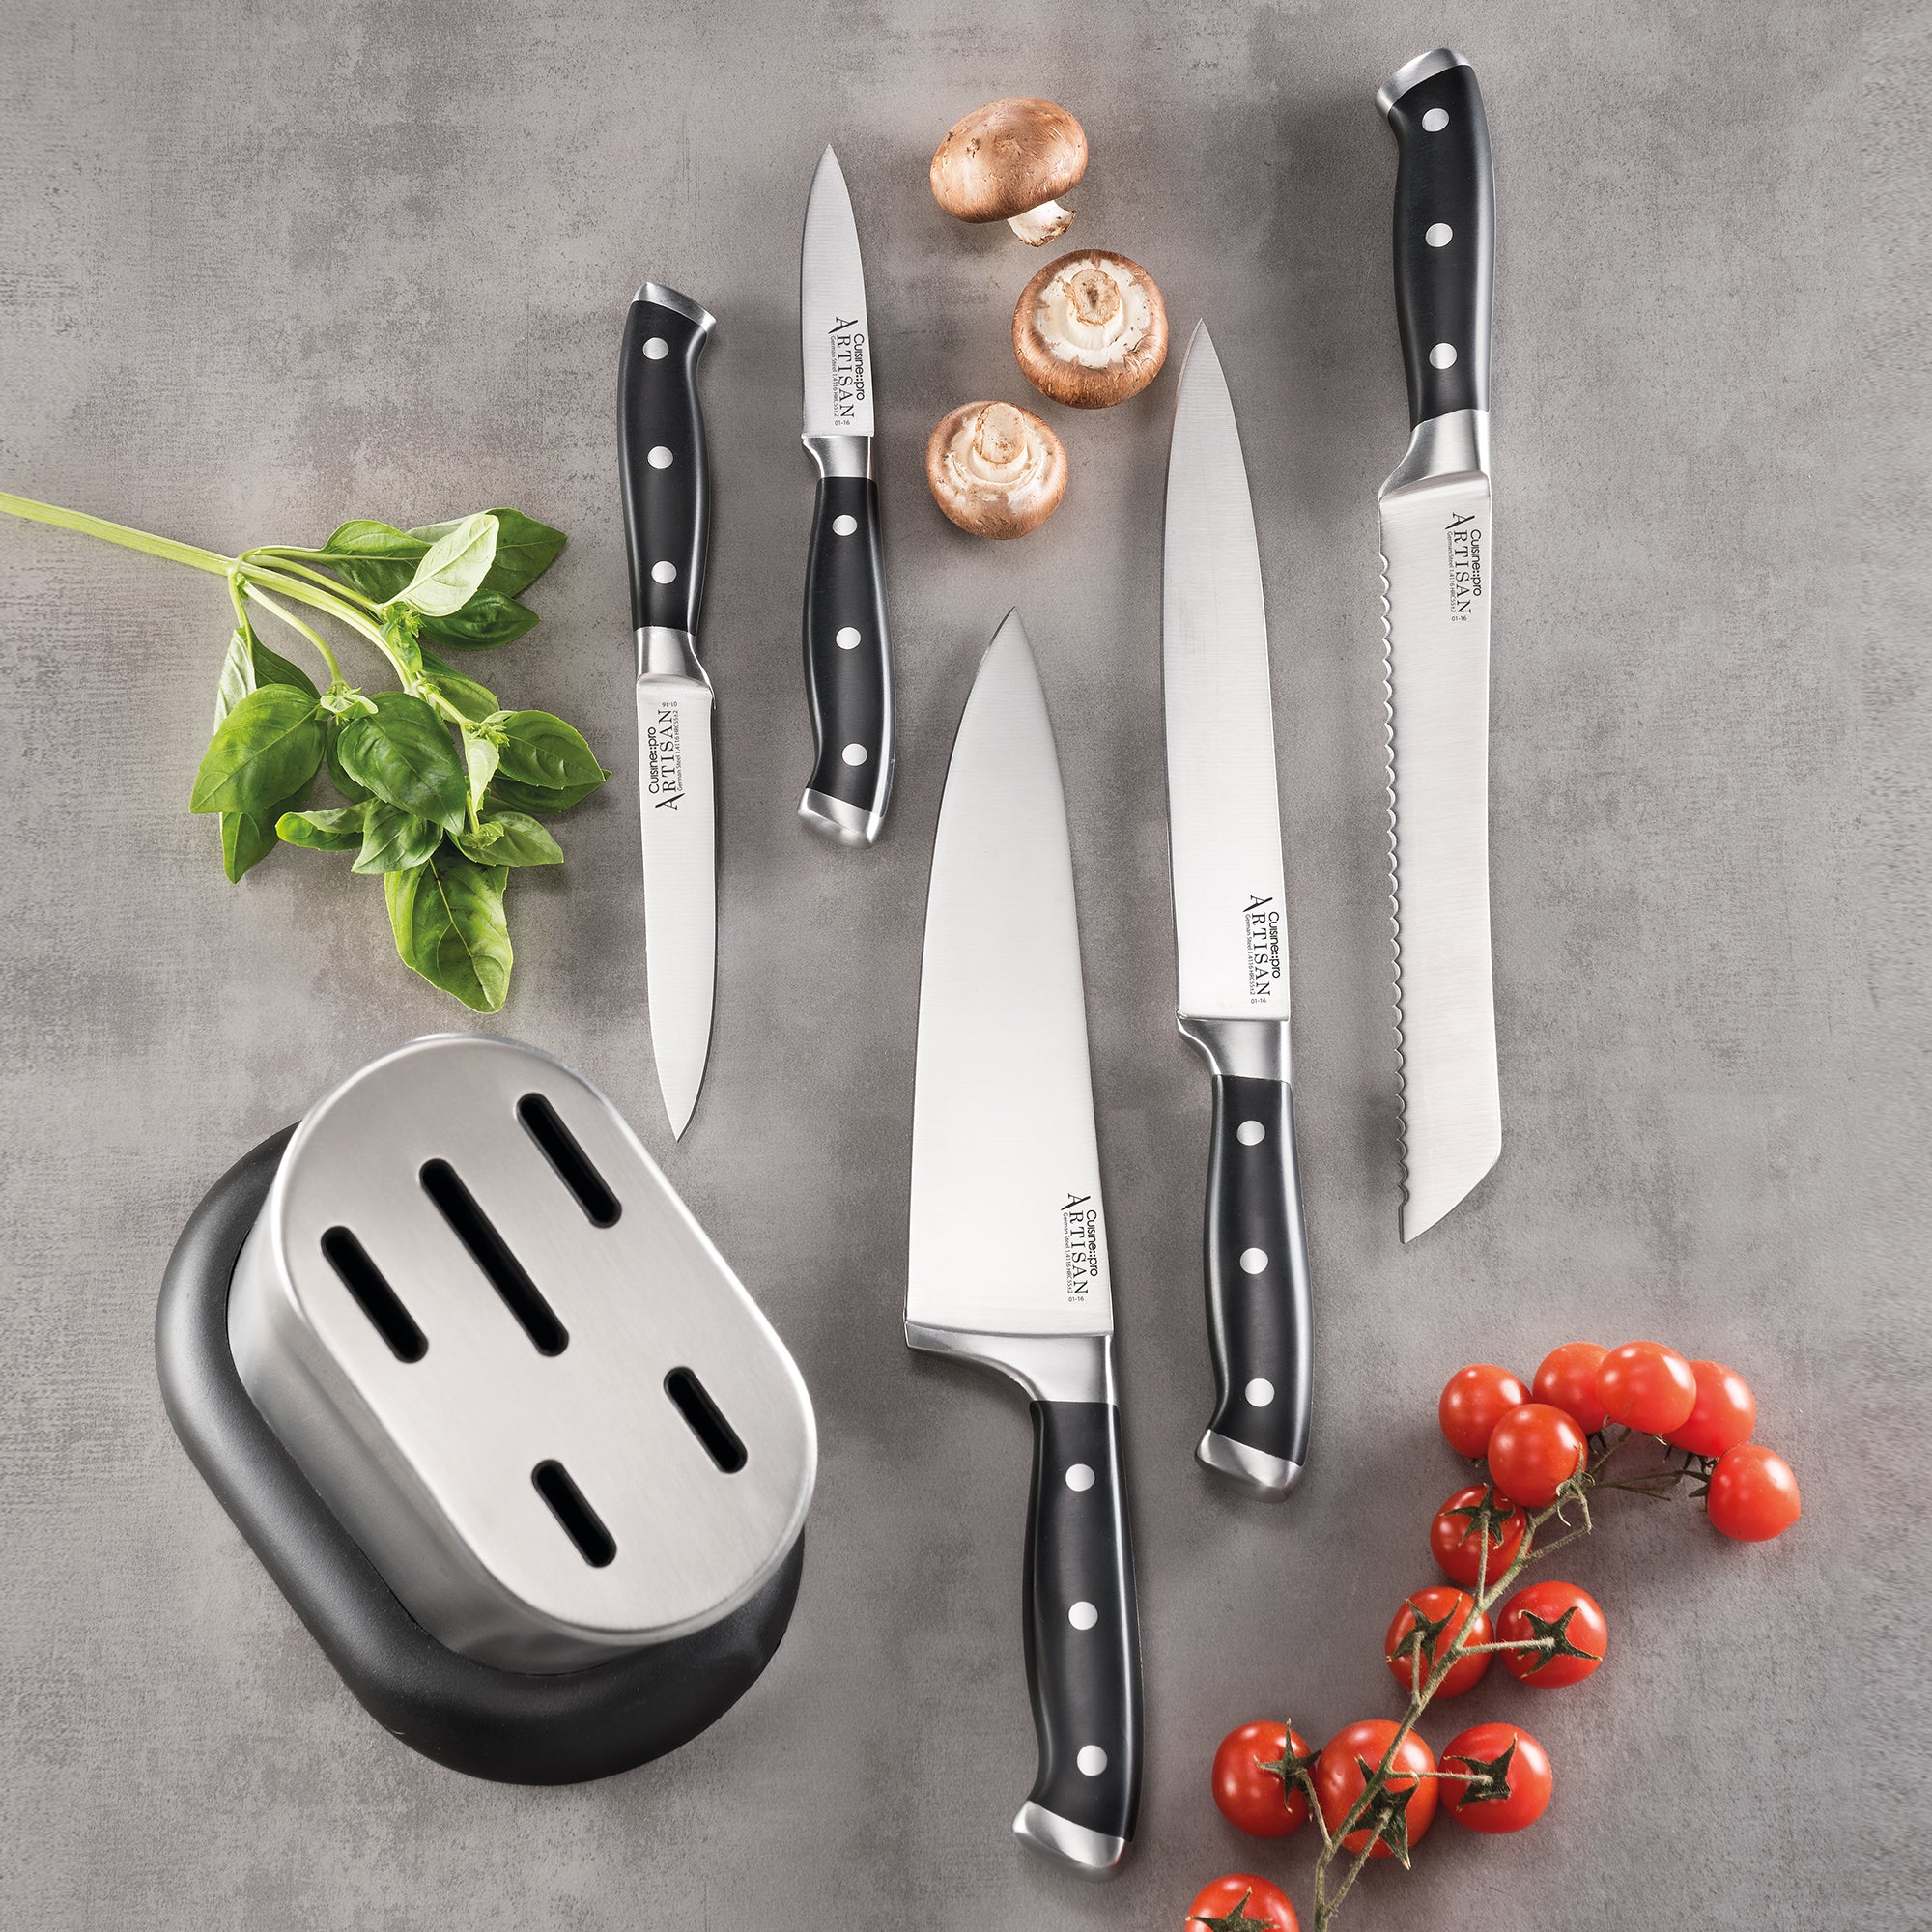  COOCRAFT 6PC Kitchen Knife Set, German Stainless Steel